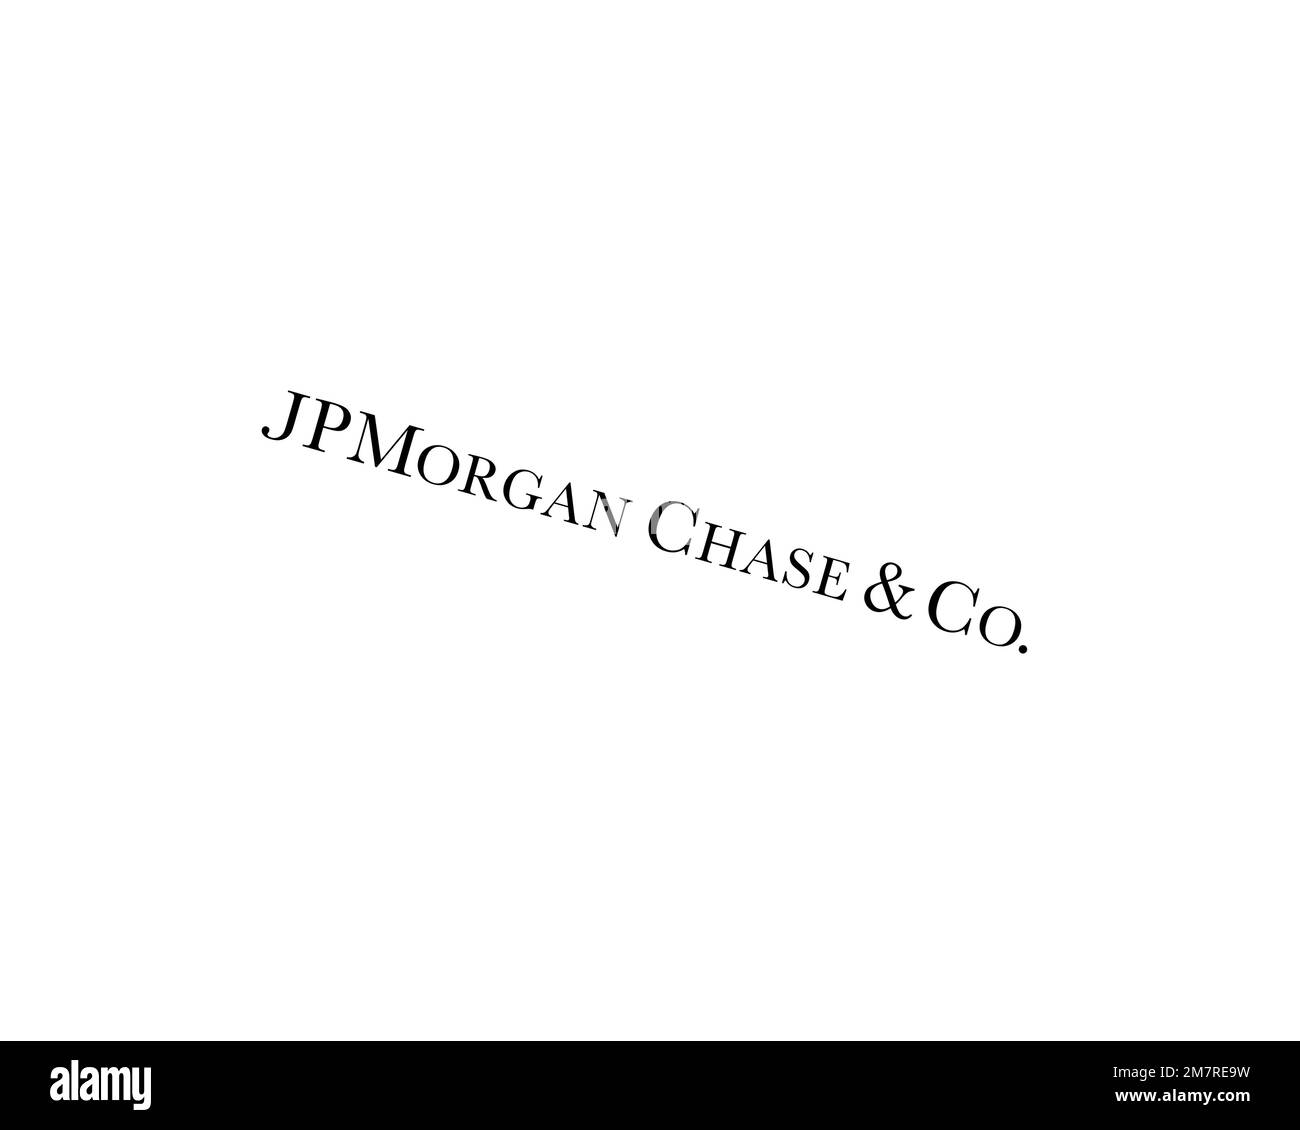 JPMorgan Chase, rotated logo, white background B Stock Photo - Alamy